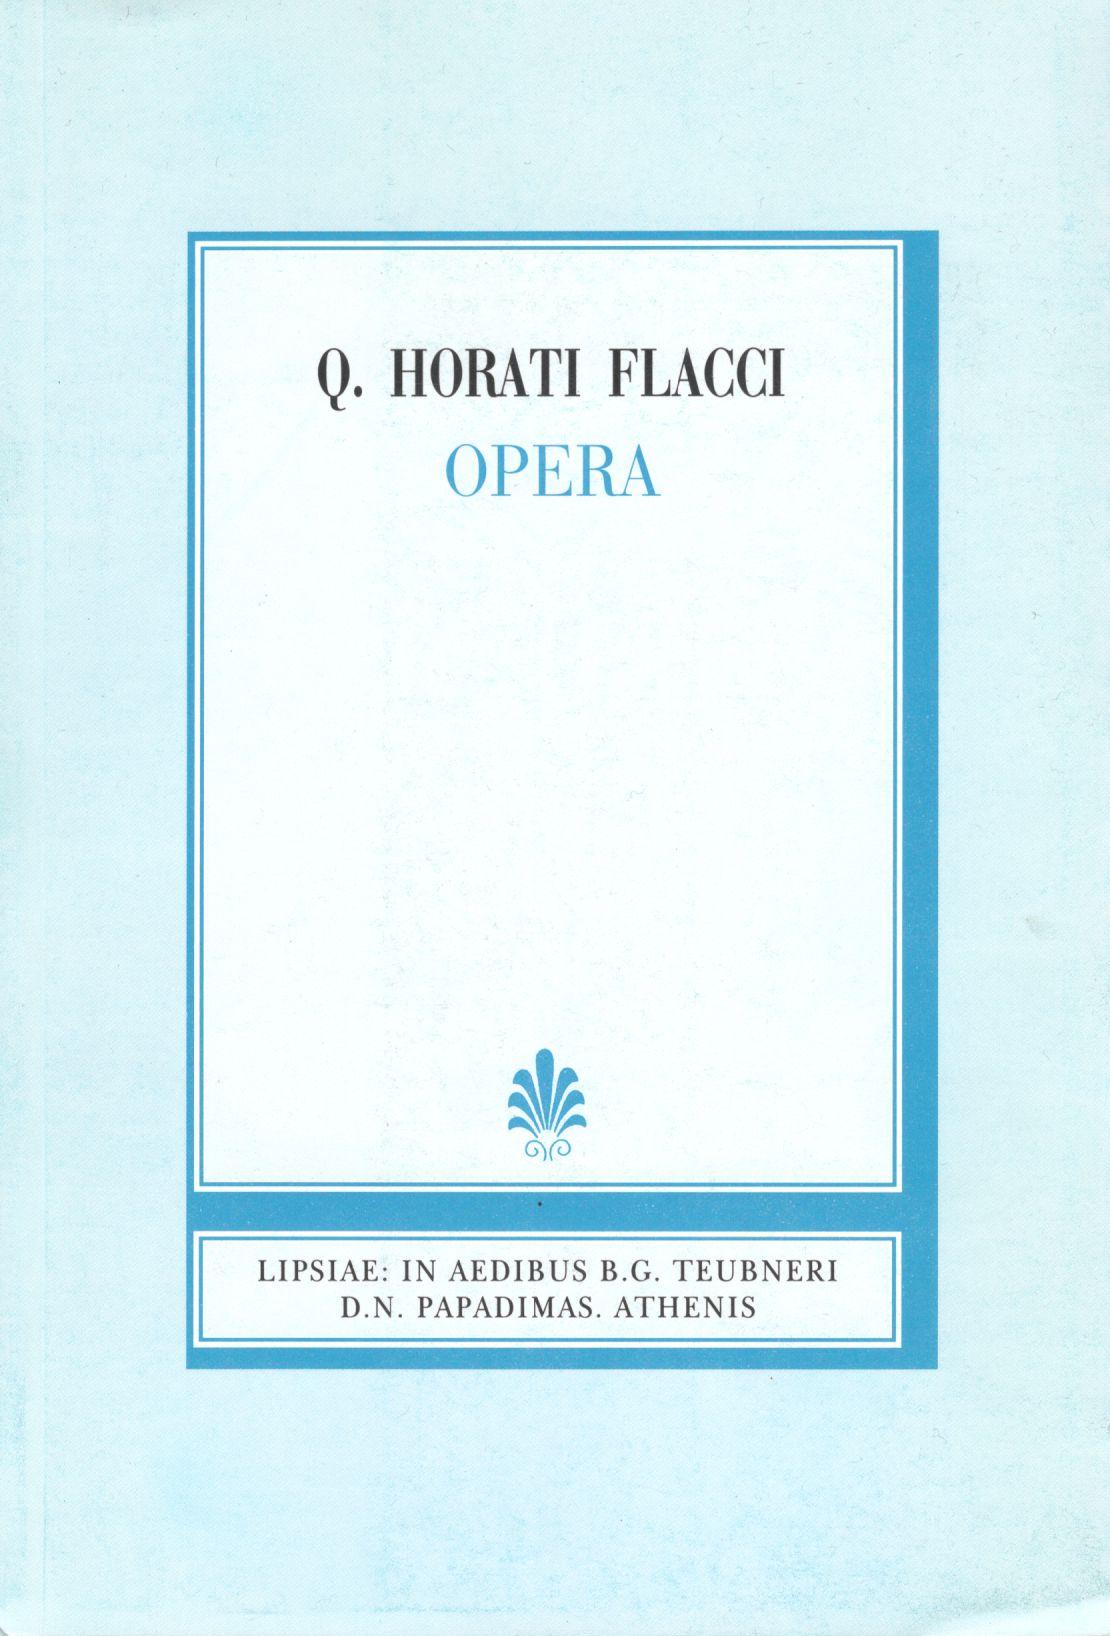 Q. Horati Flacci, Opera. Carmina: Libri I-IV, [Κοίντου Οράτιου Φλάκκου, Ωδαί: βιβλία Α